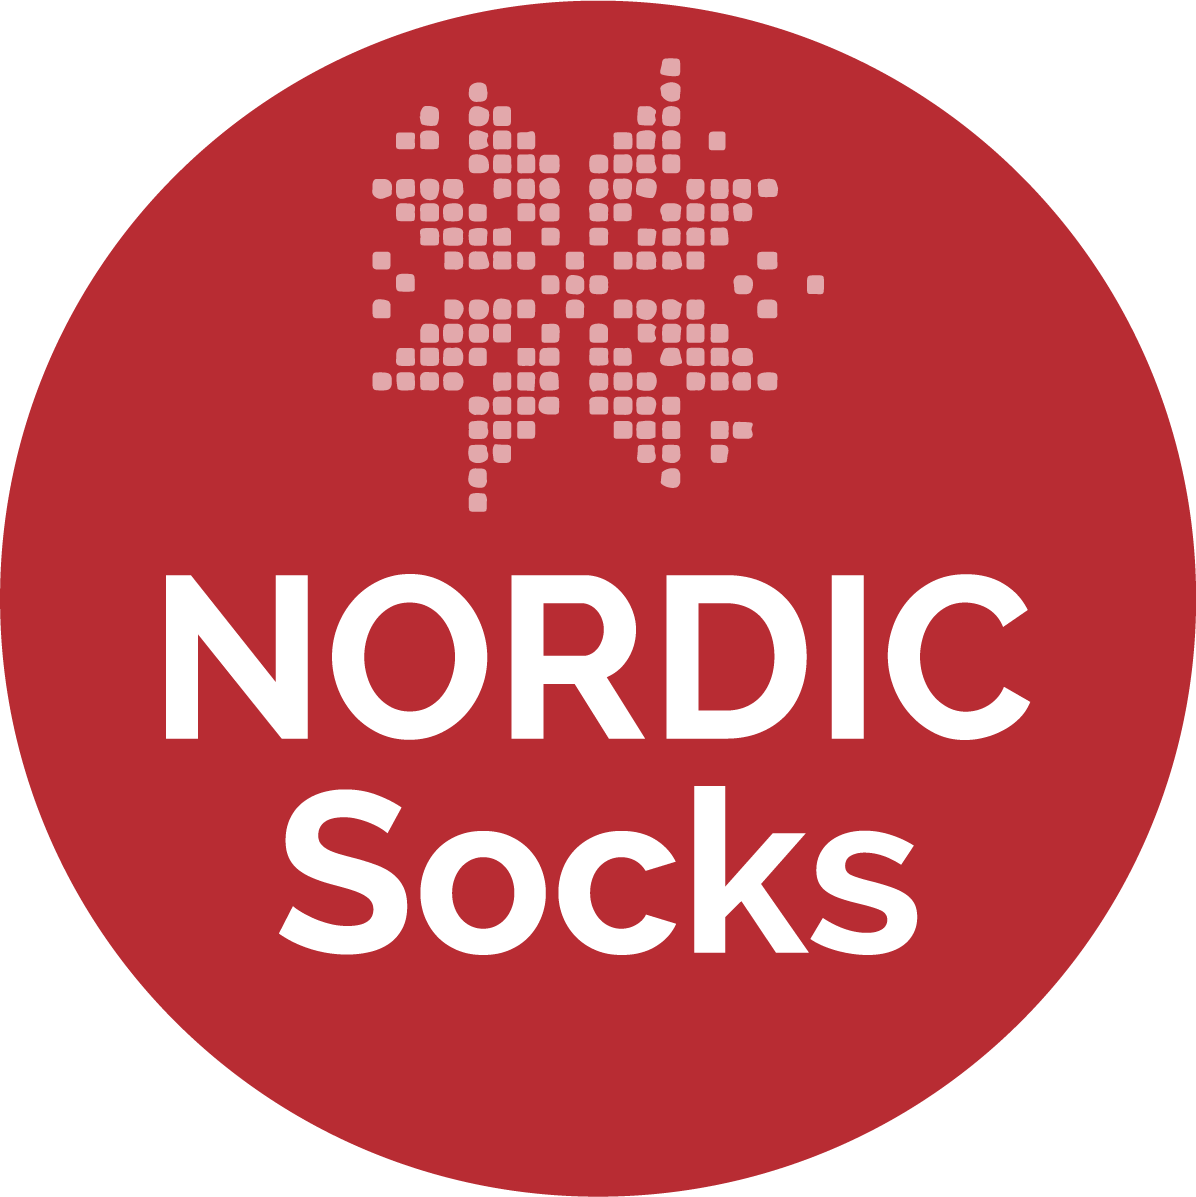 The nordic socks